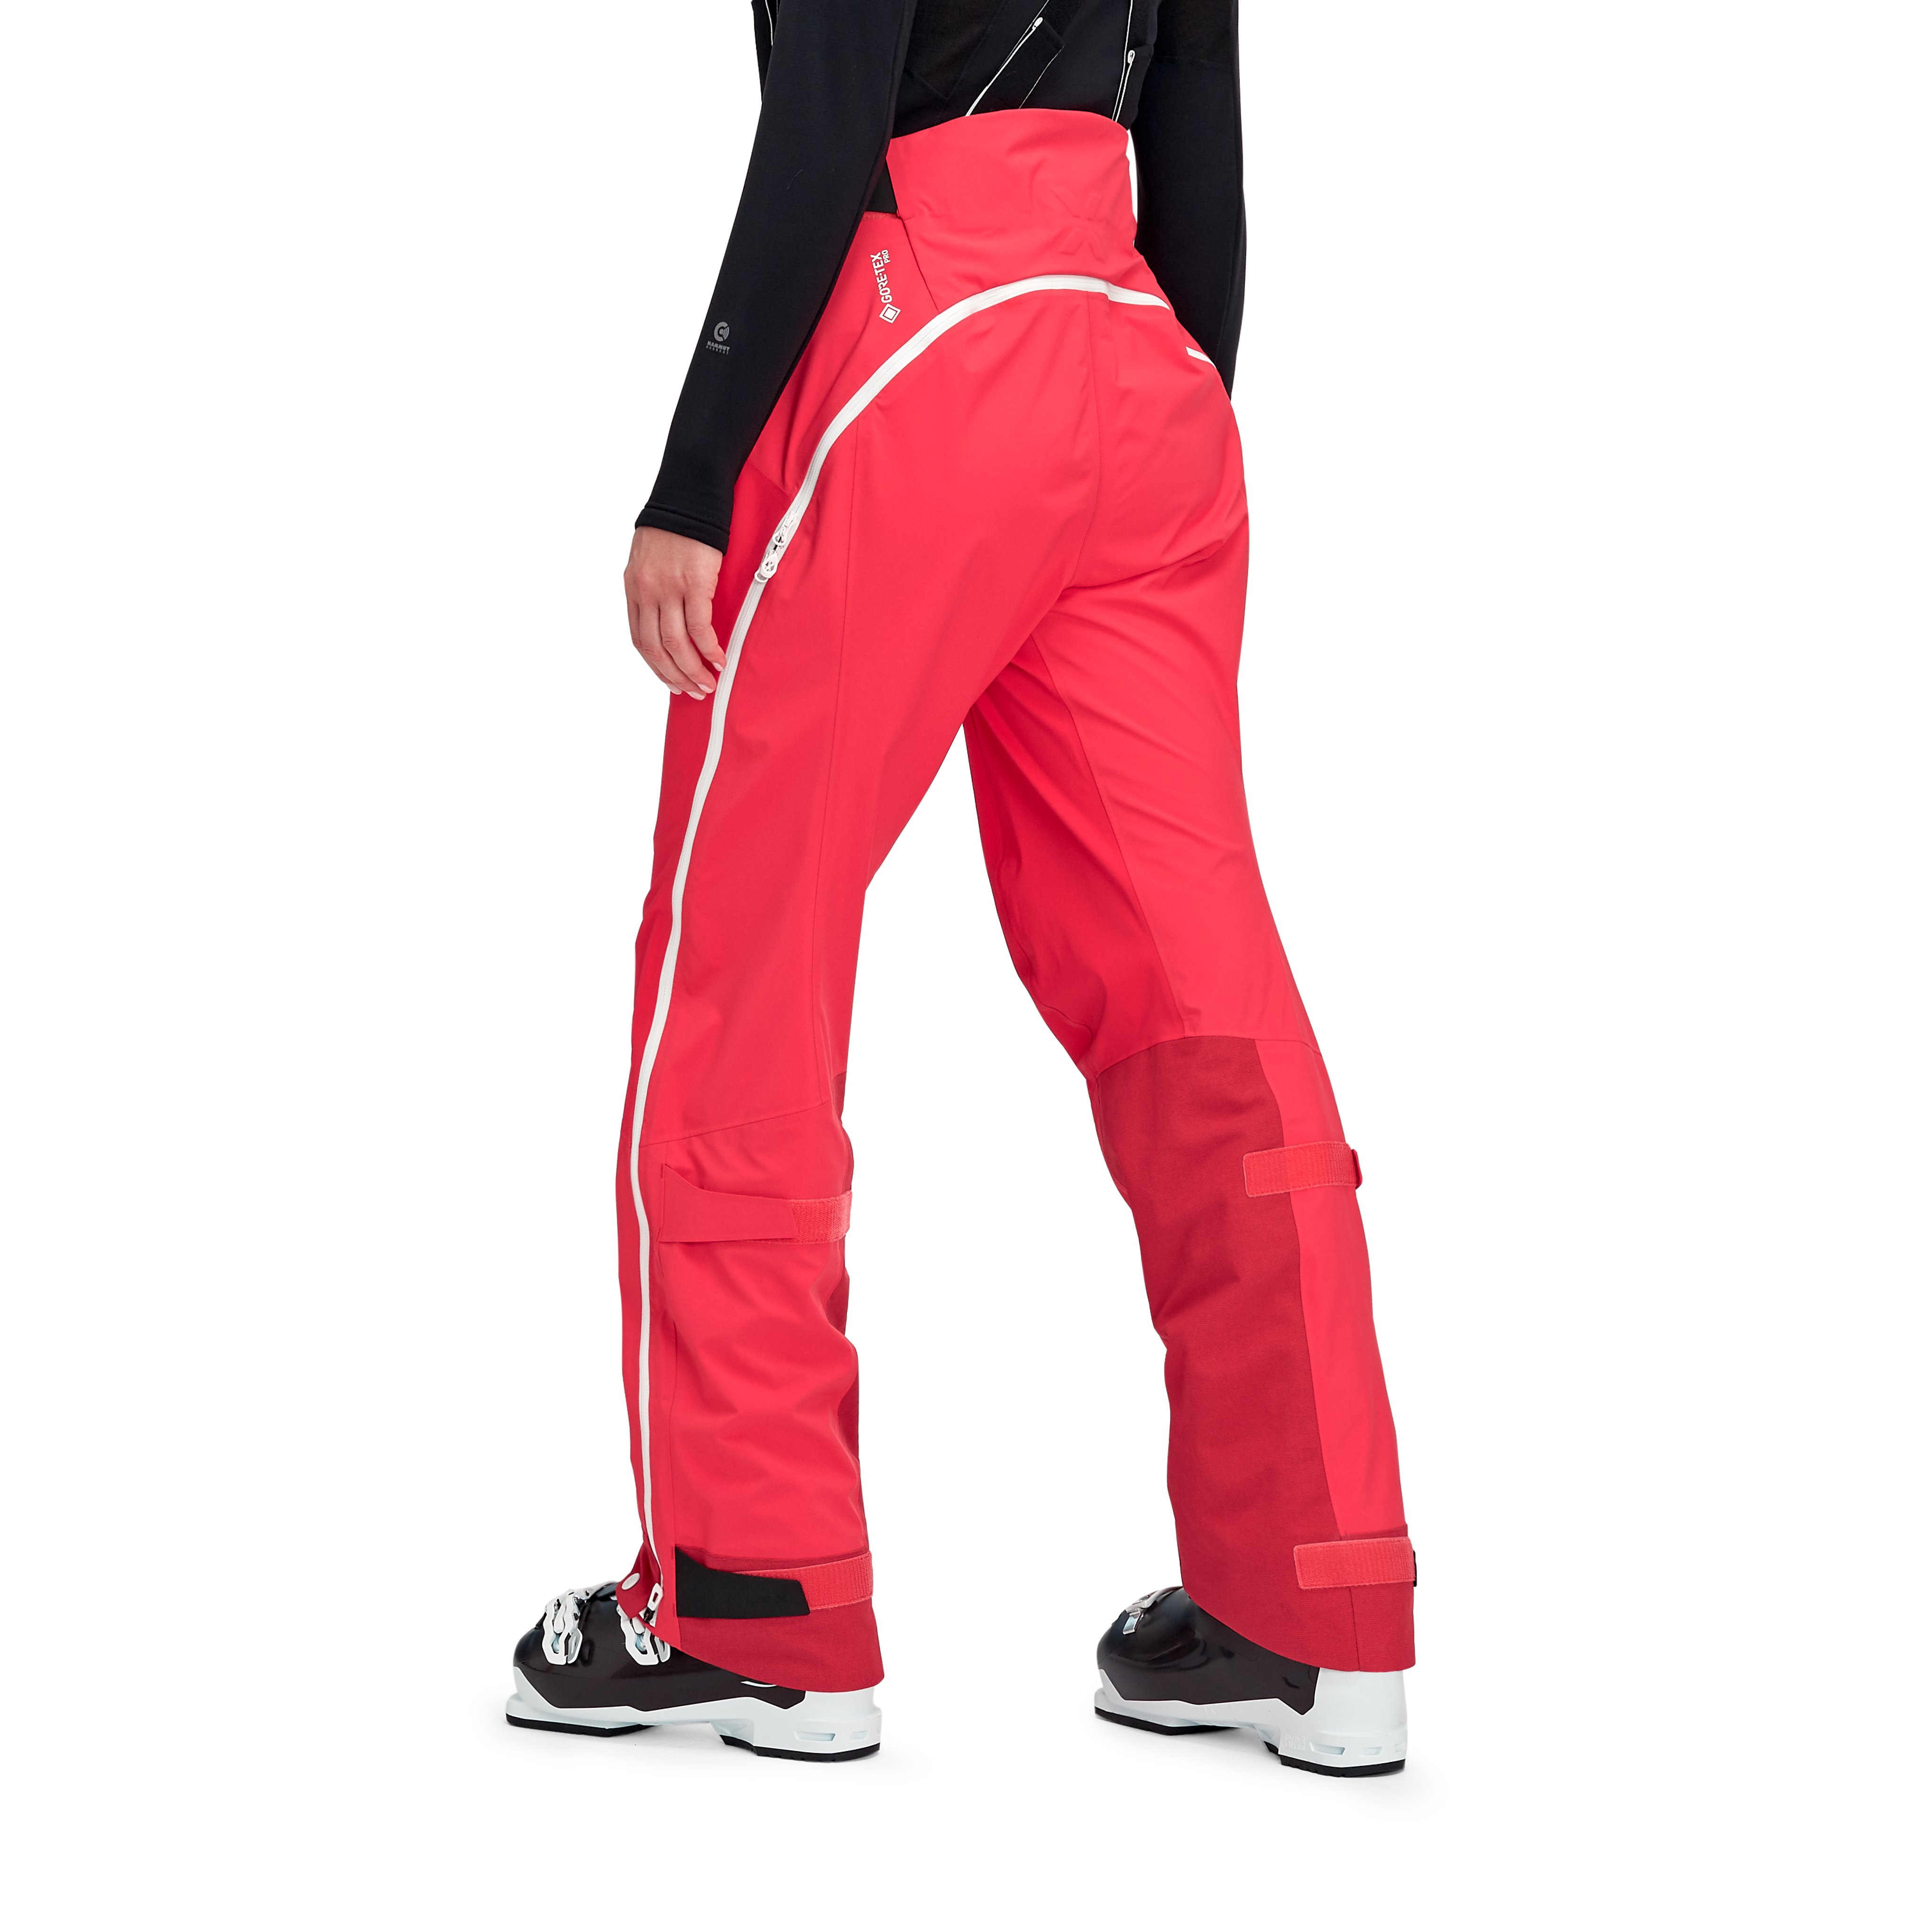 Nordwand Pro HS Pants Women product image